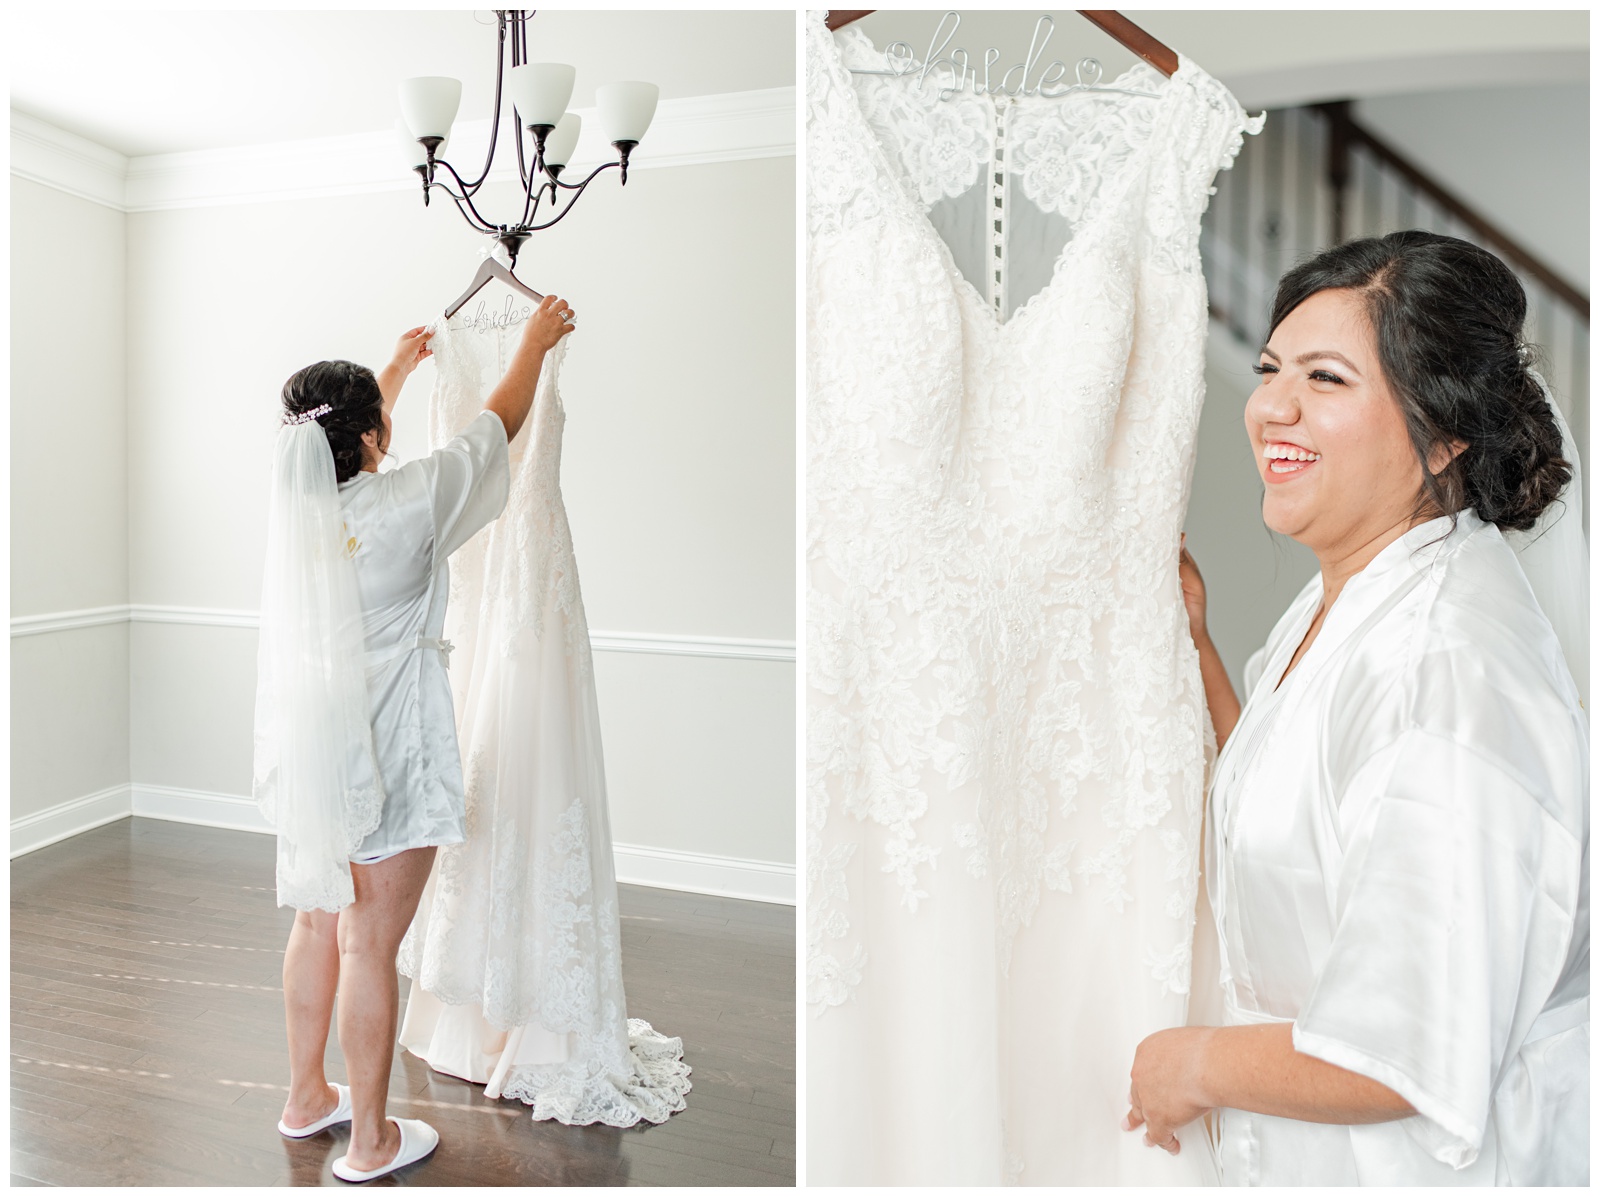 Bride looking at her dress wedding dress details